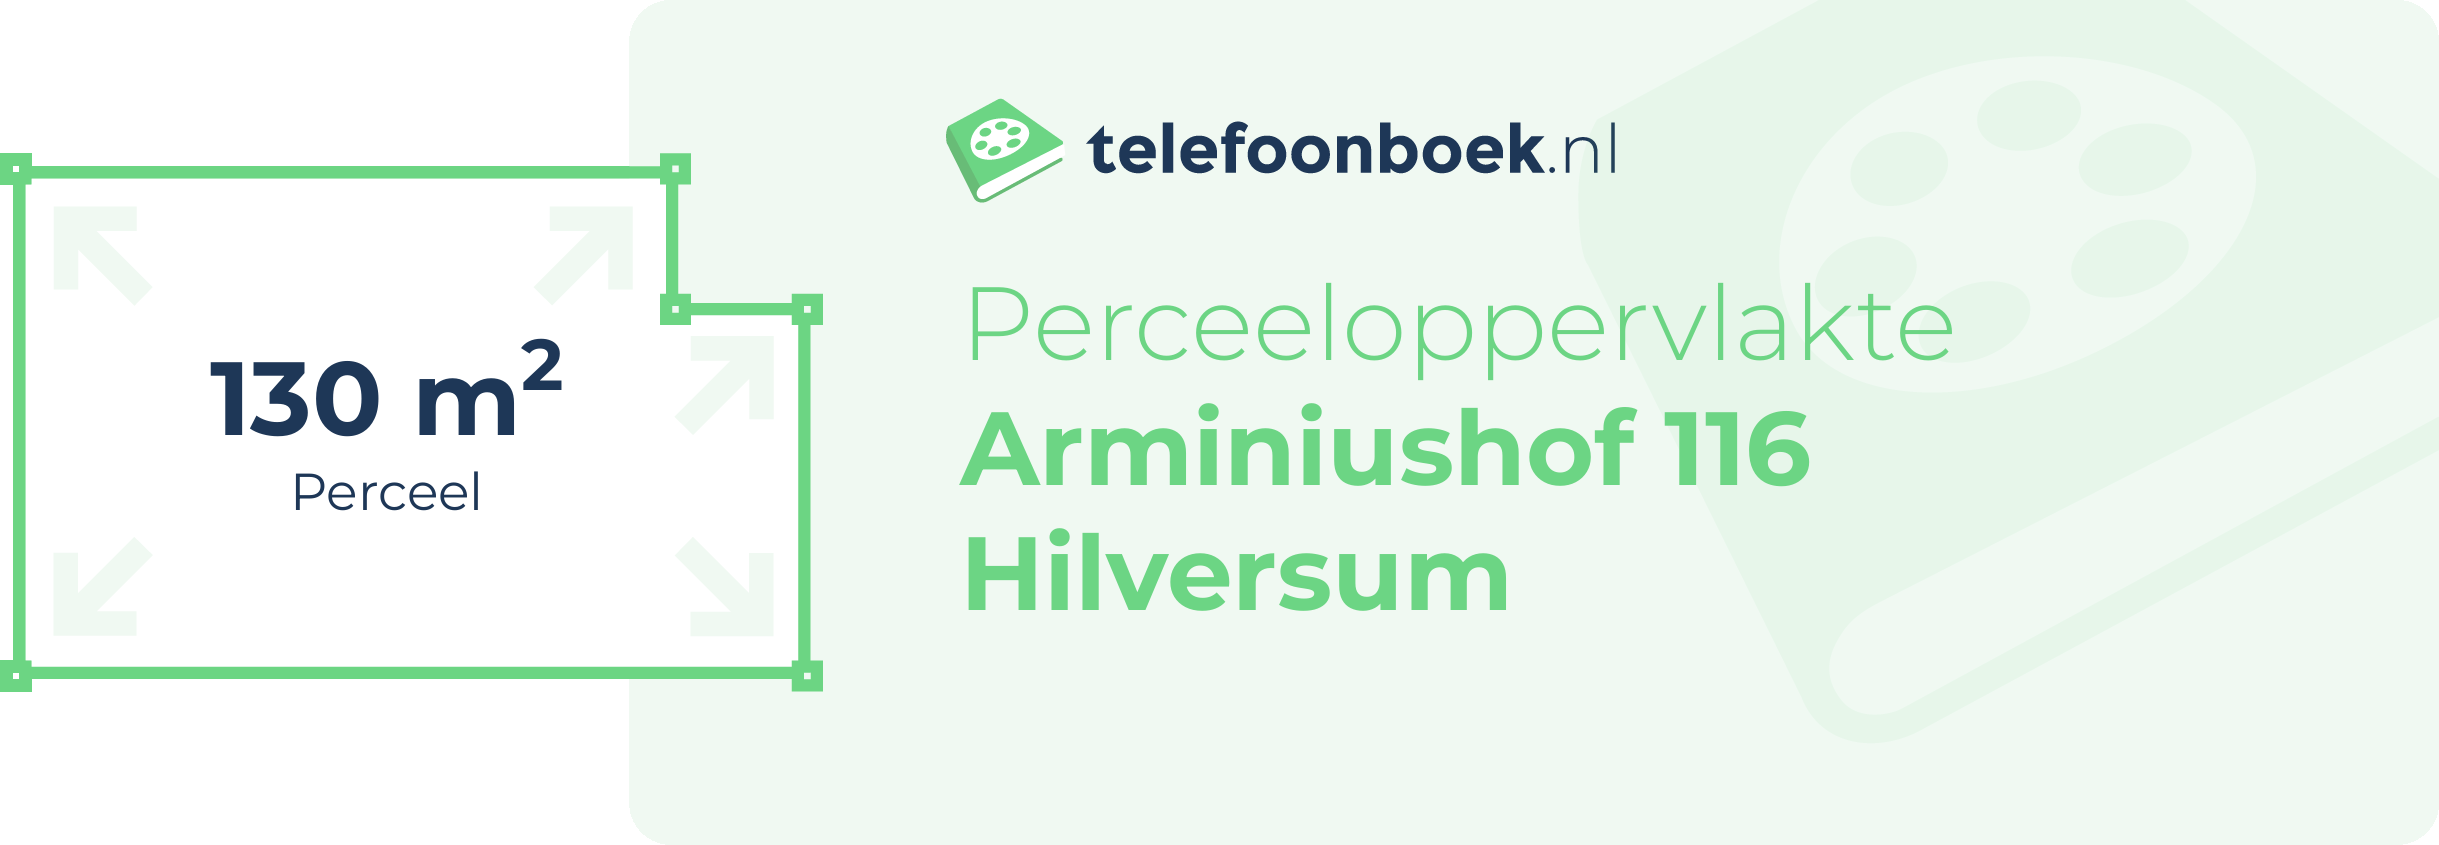 Perceeloppervlakte Arminiushof 116 Hilversum